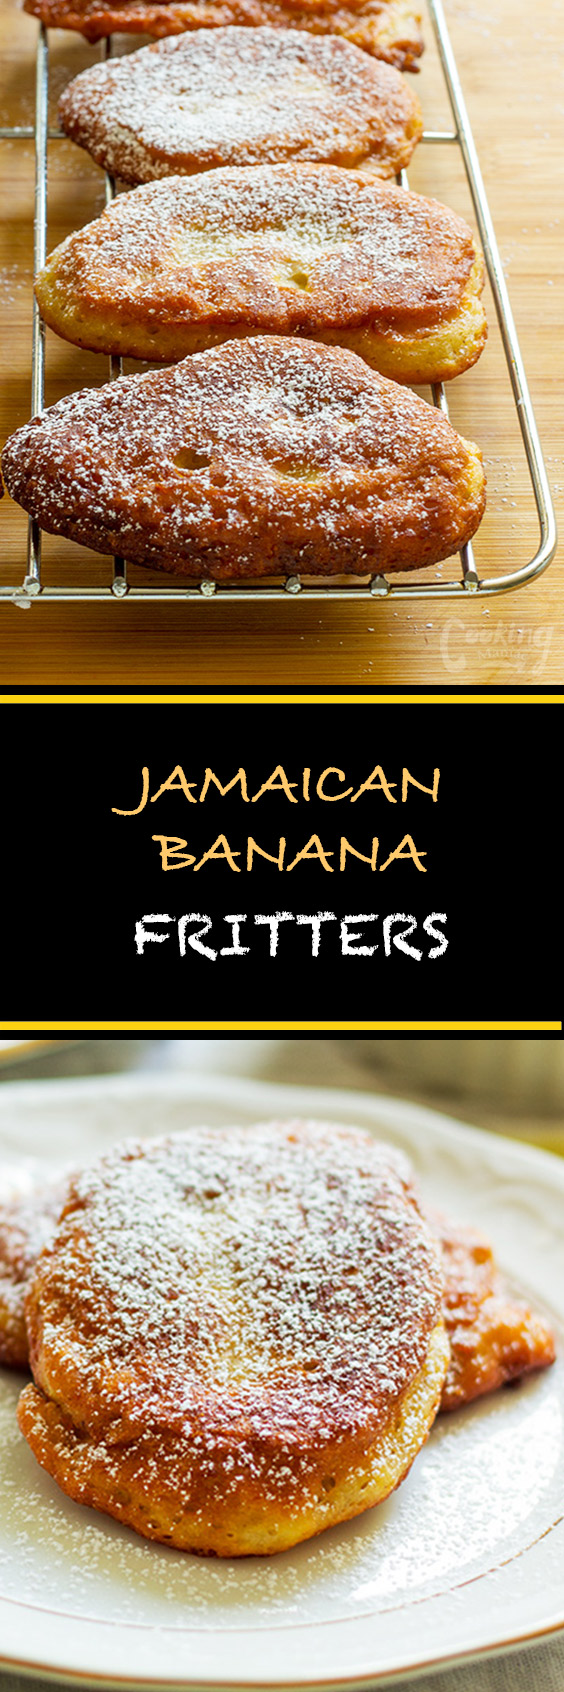 JAMAICAN_BANANA-FRITTERS